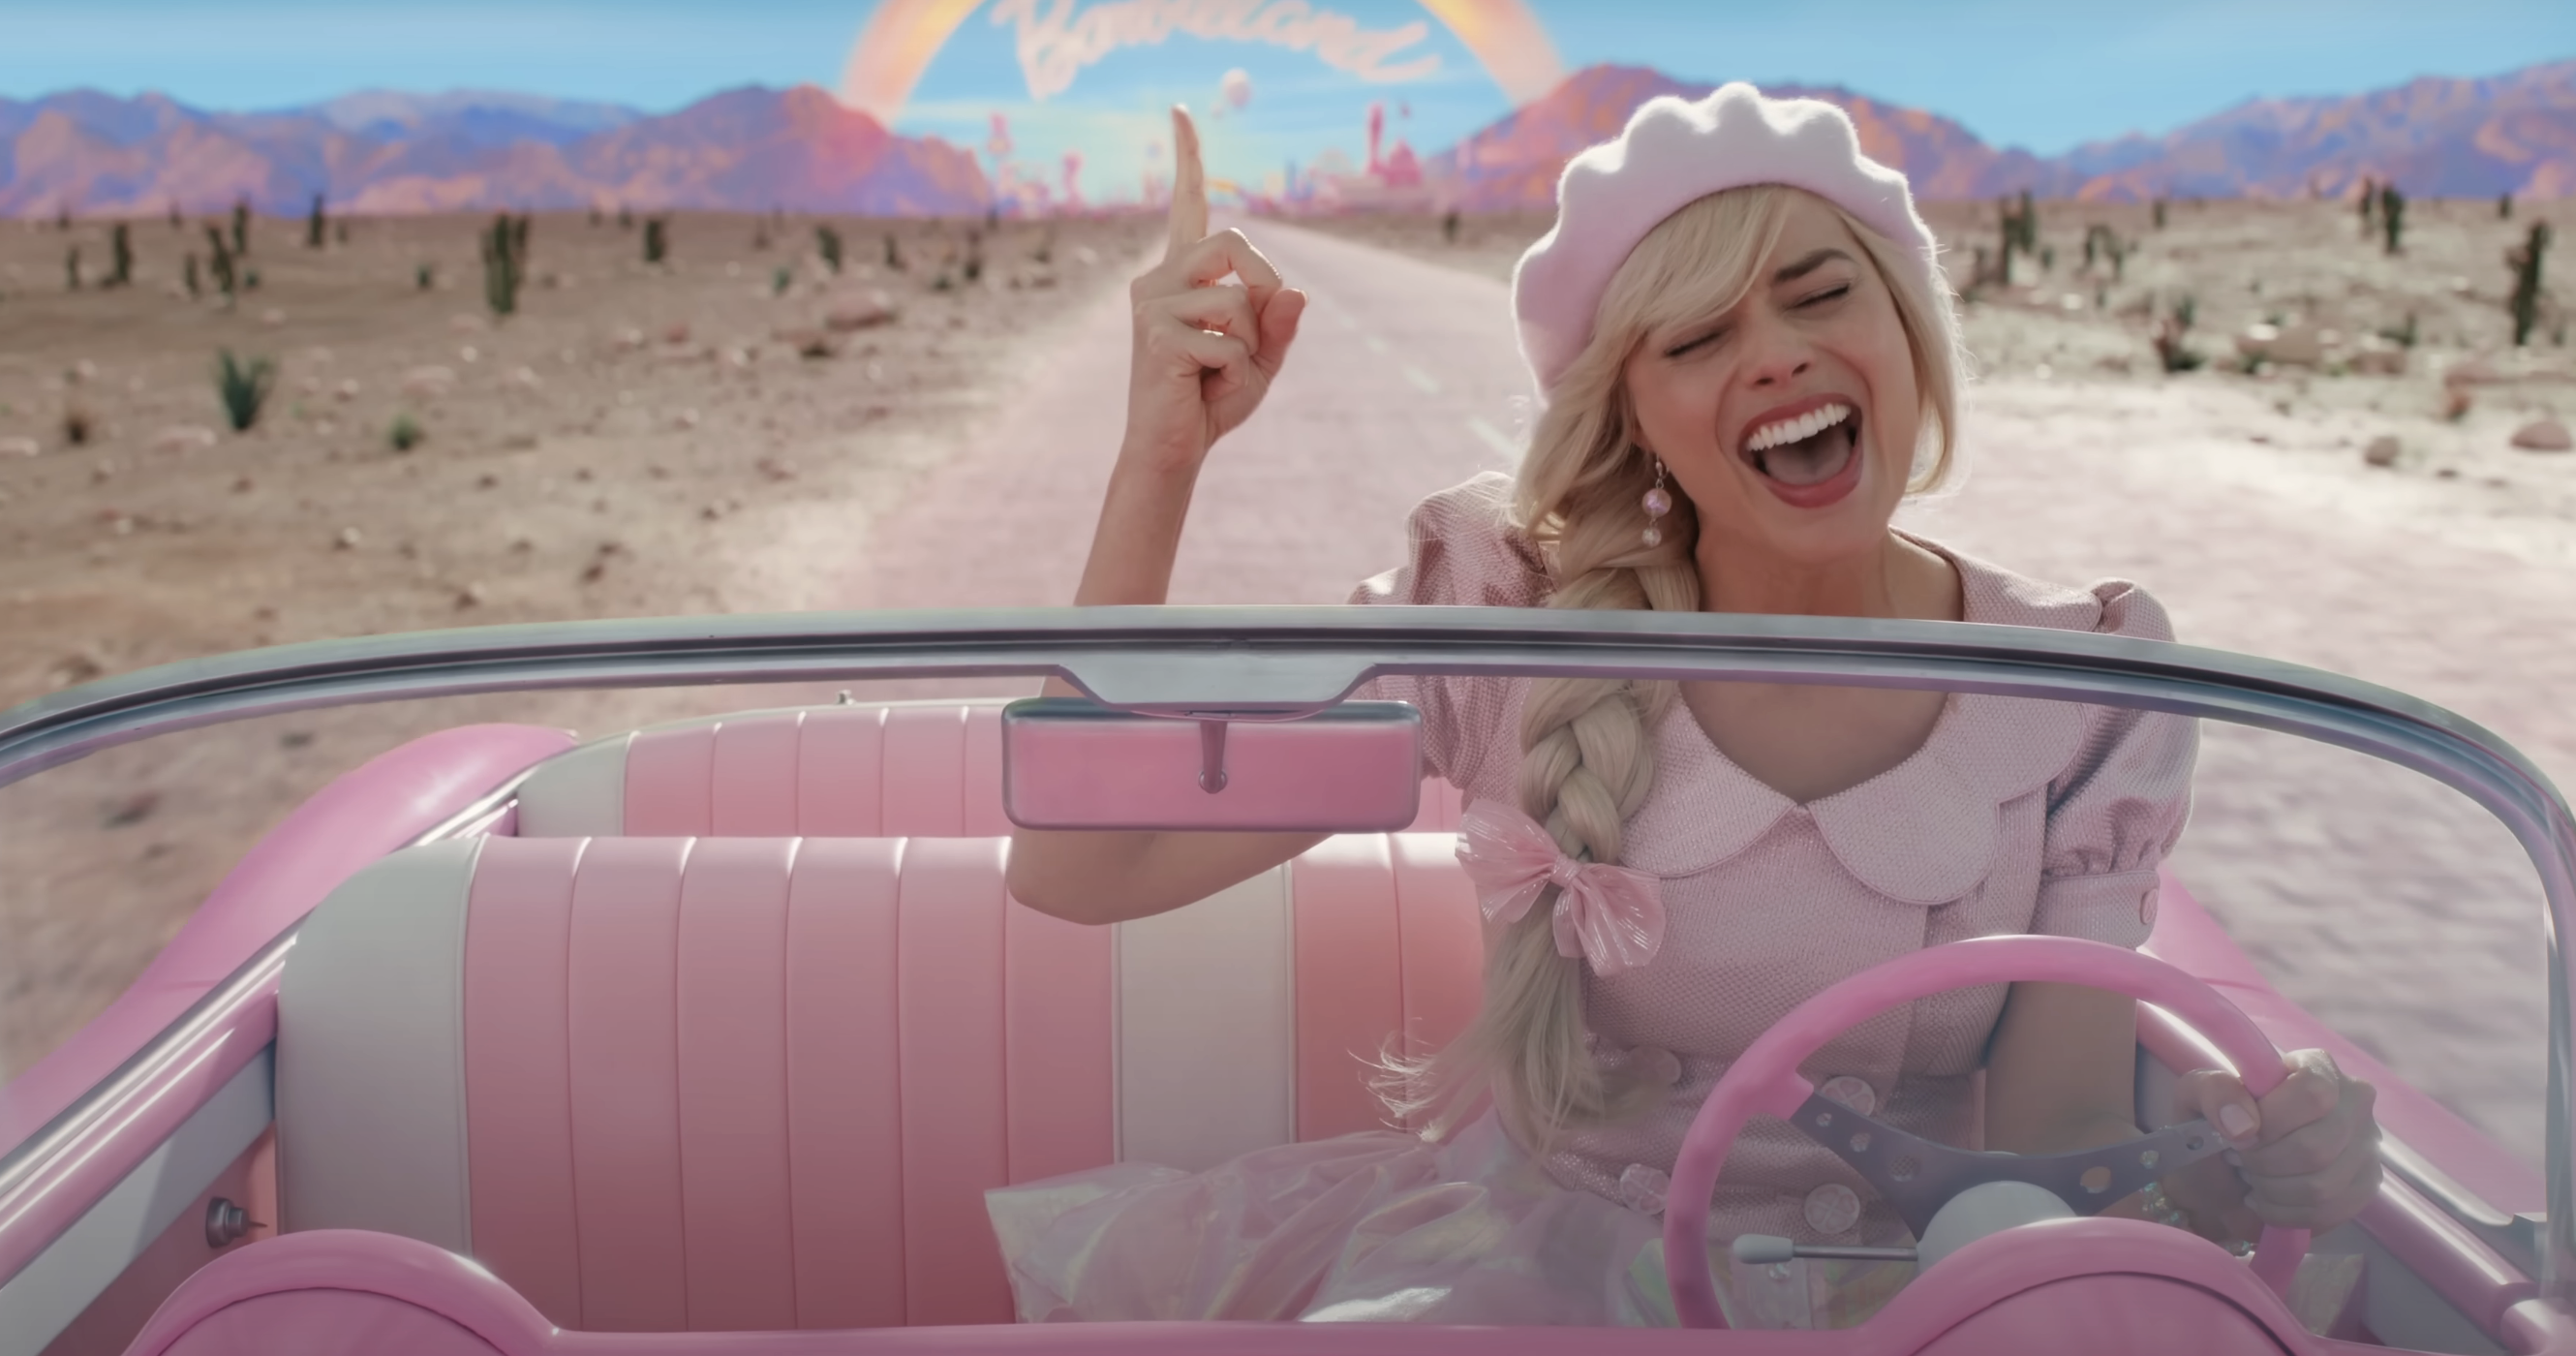 barbie singing in a convertible car